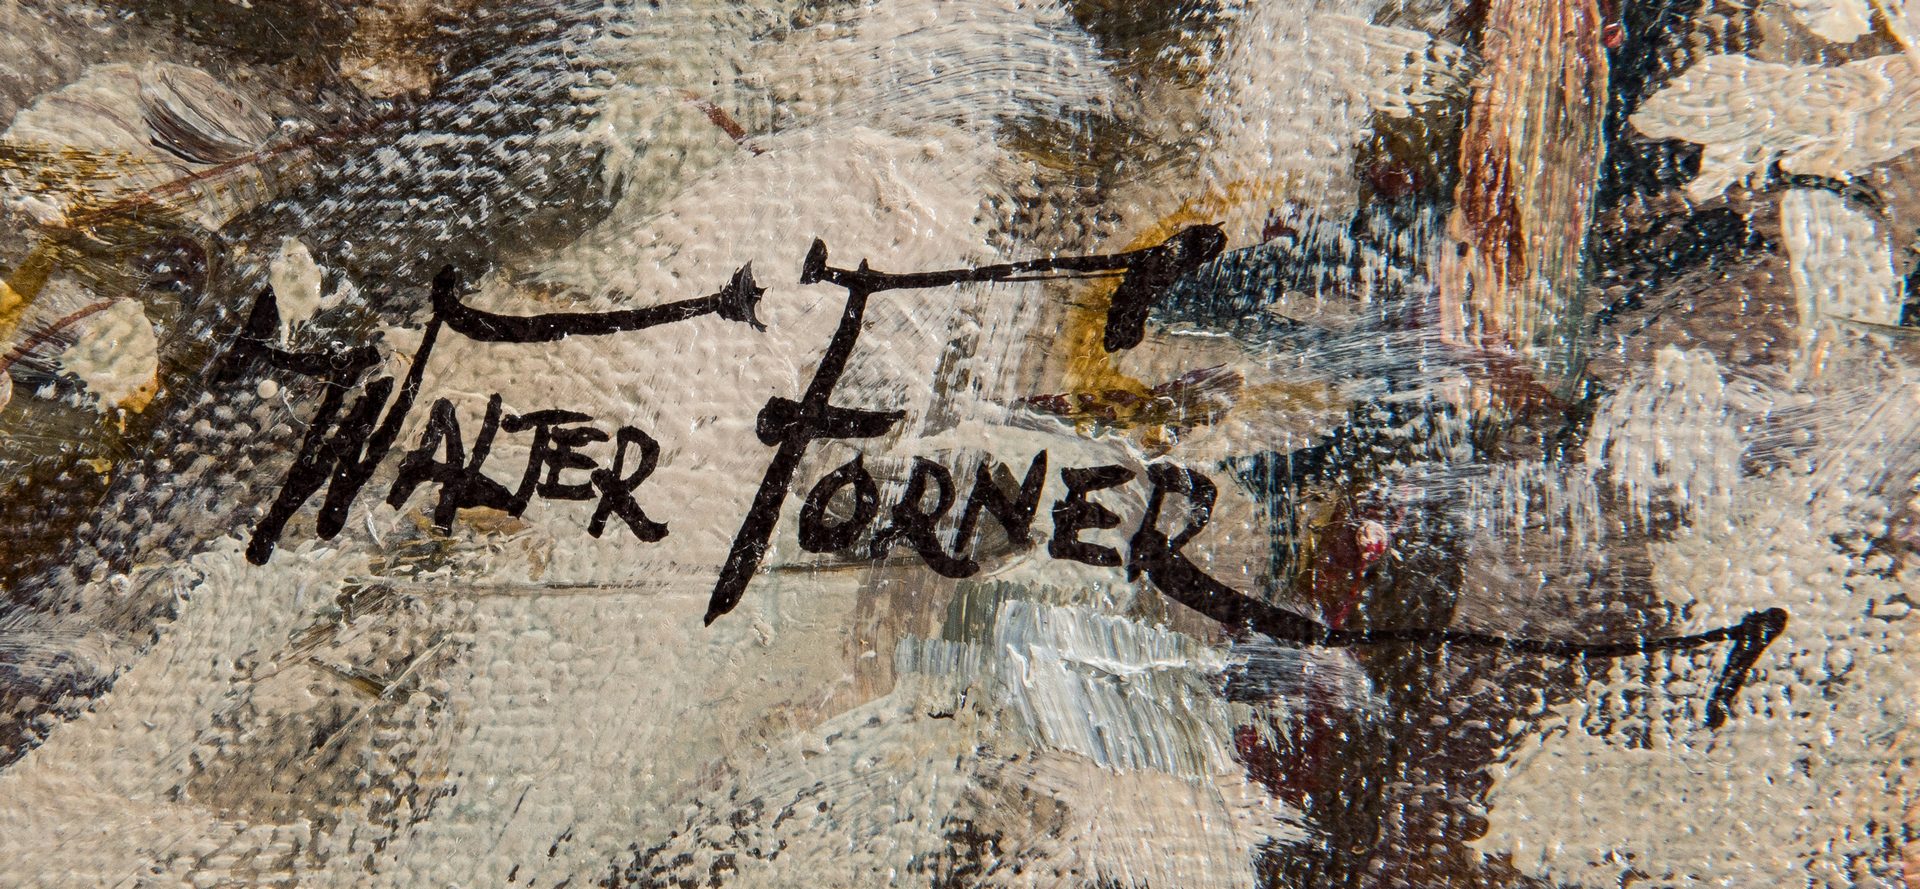 Lot 83: Walter Forner O/C Painting, Parisian Winter Street Scene